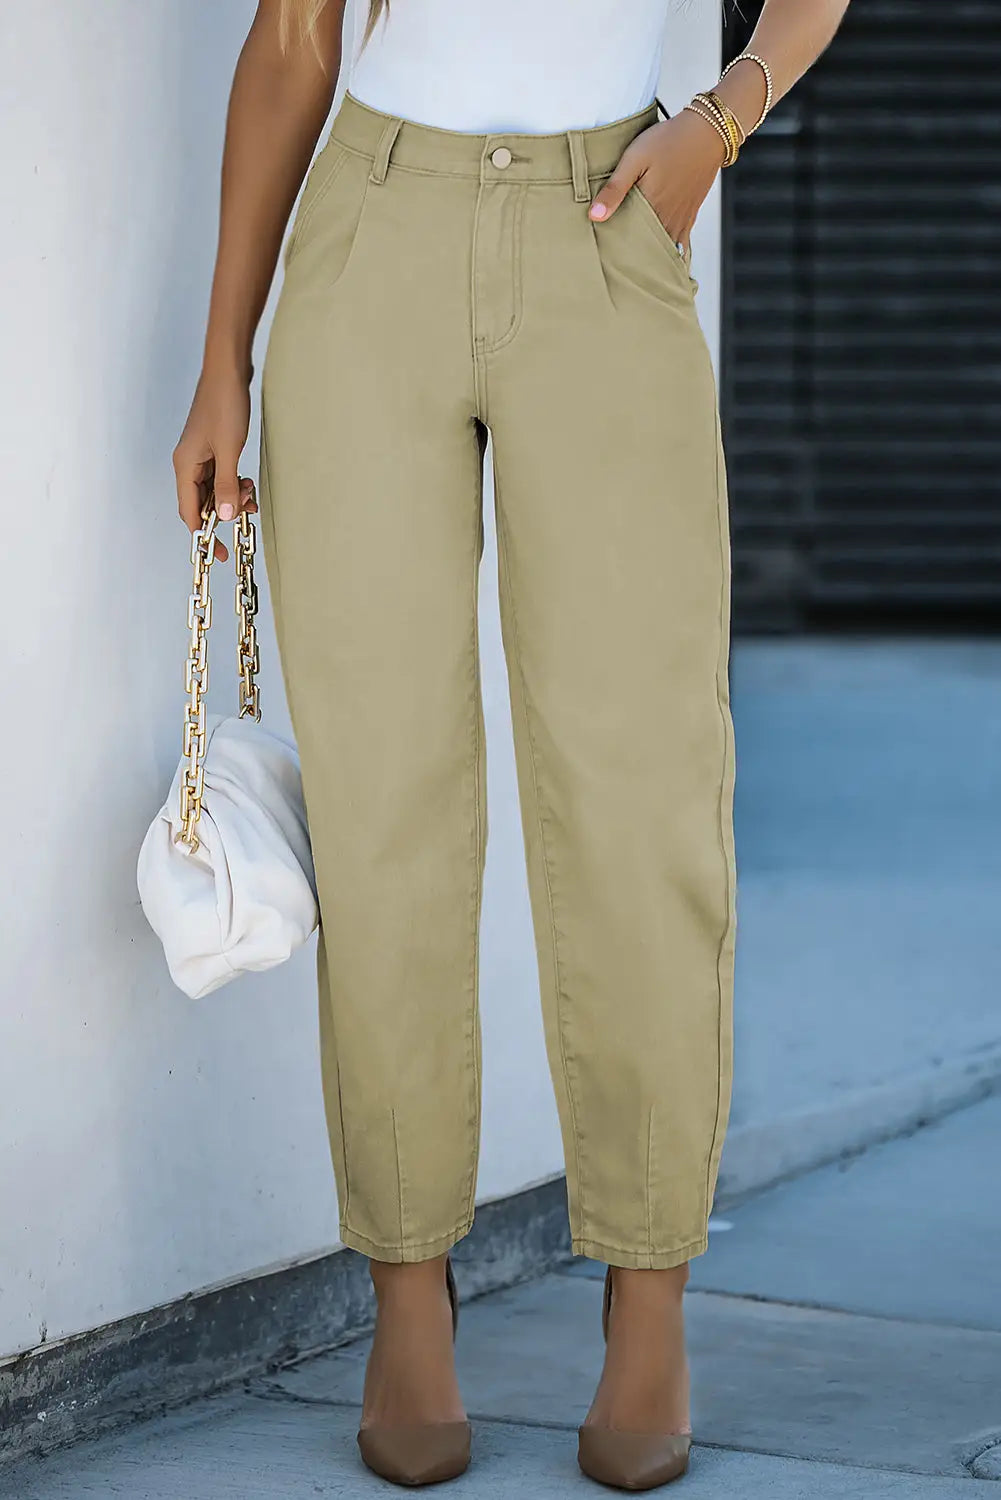 Khaki solid high waist casual pants - 4 / 98% cotton + 2% elastane - cargo